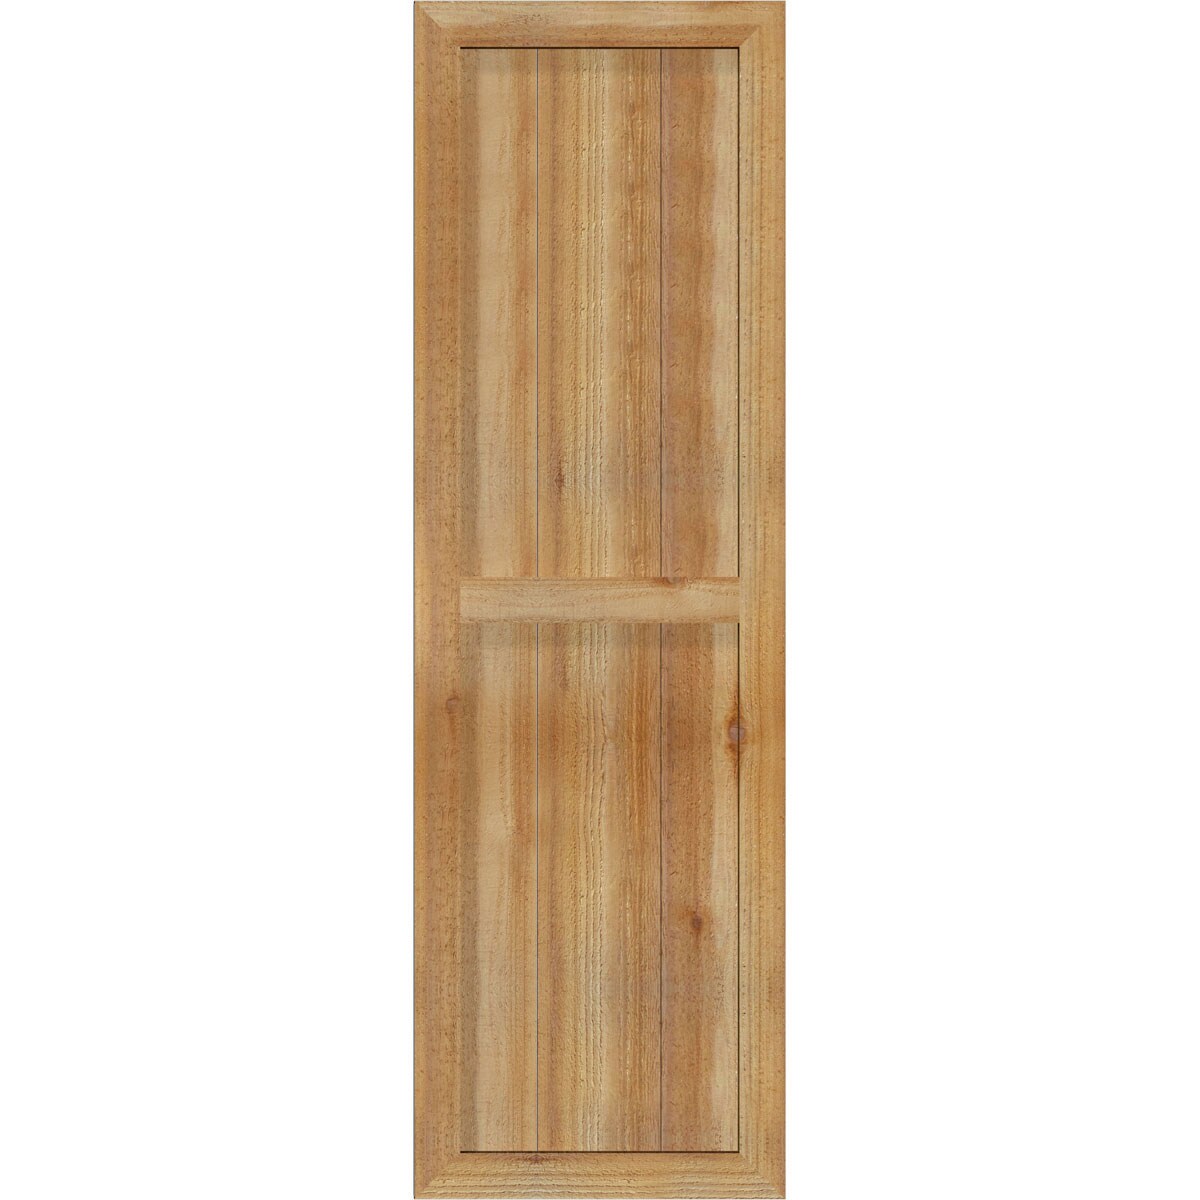 Ekena Millwork EB0110500X035500CUN Exterior Composite Wood Three Board Two Batten Board-n-Batten Shutters with Installation Brackets 10 1/2W x 35 1/2H 10 1/2W x 35 1/2H Unfinished Per Pair